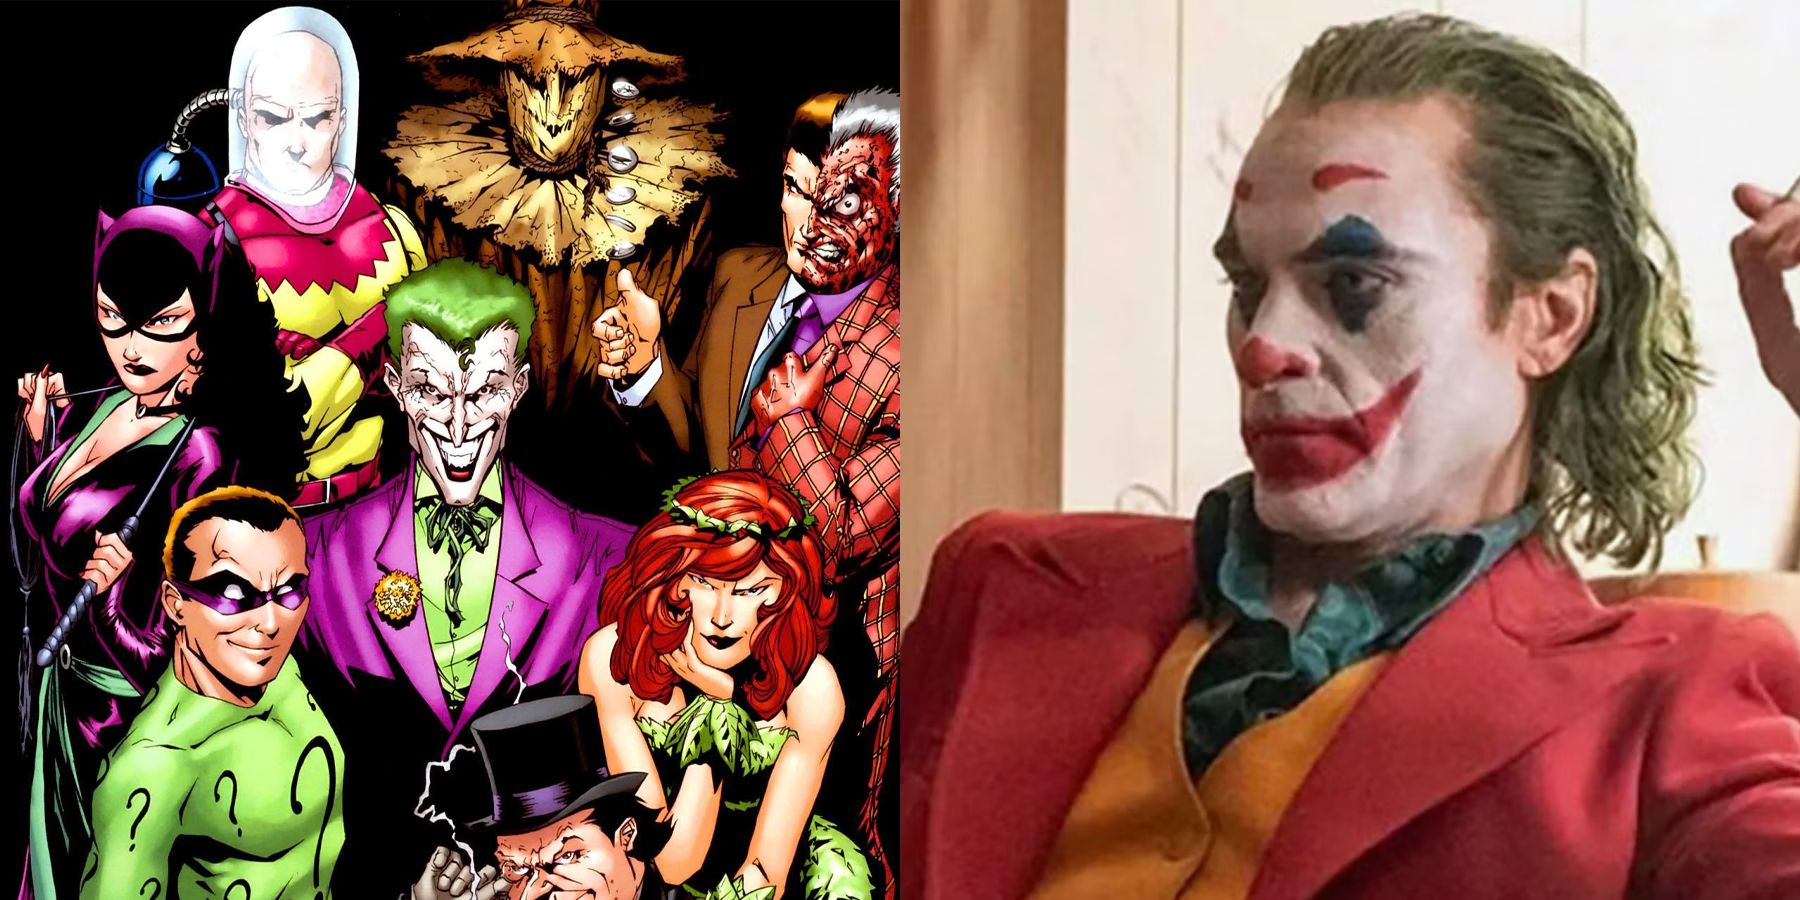 Joker 2 Set Photos Seemingly Confirm Batman Villain Two-Face